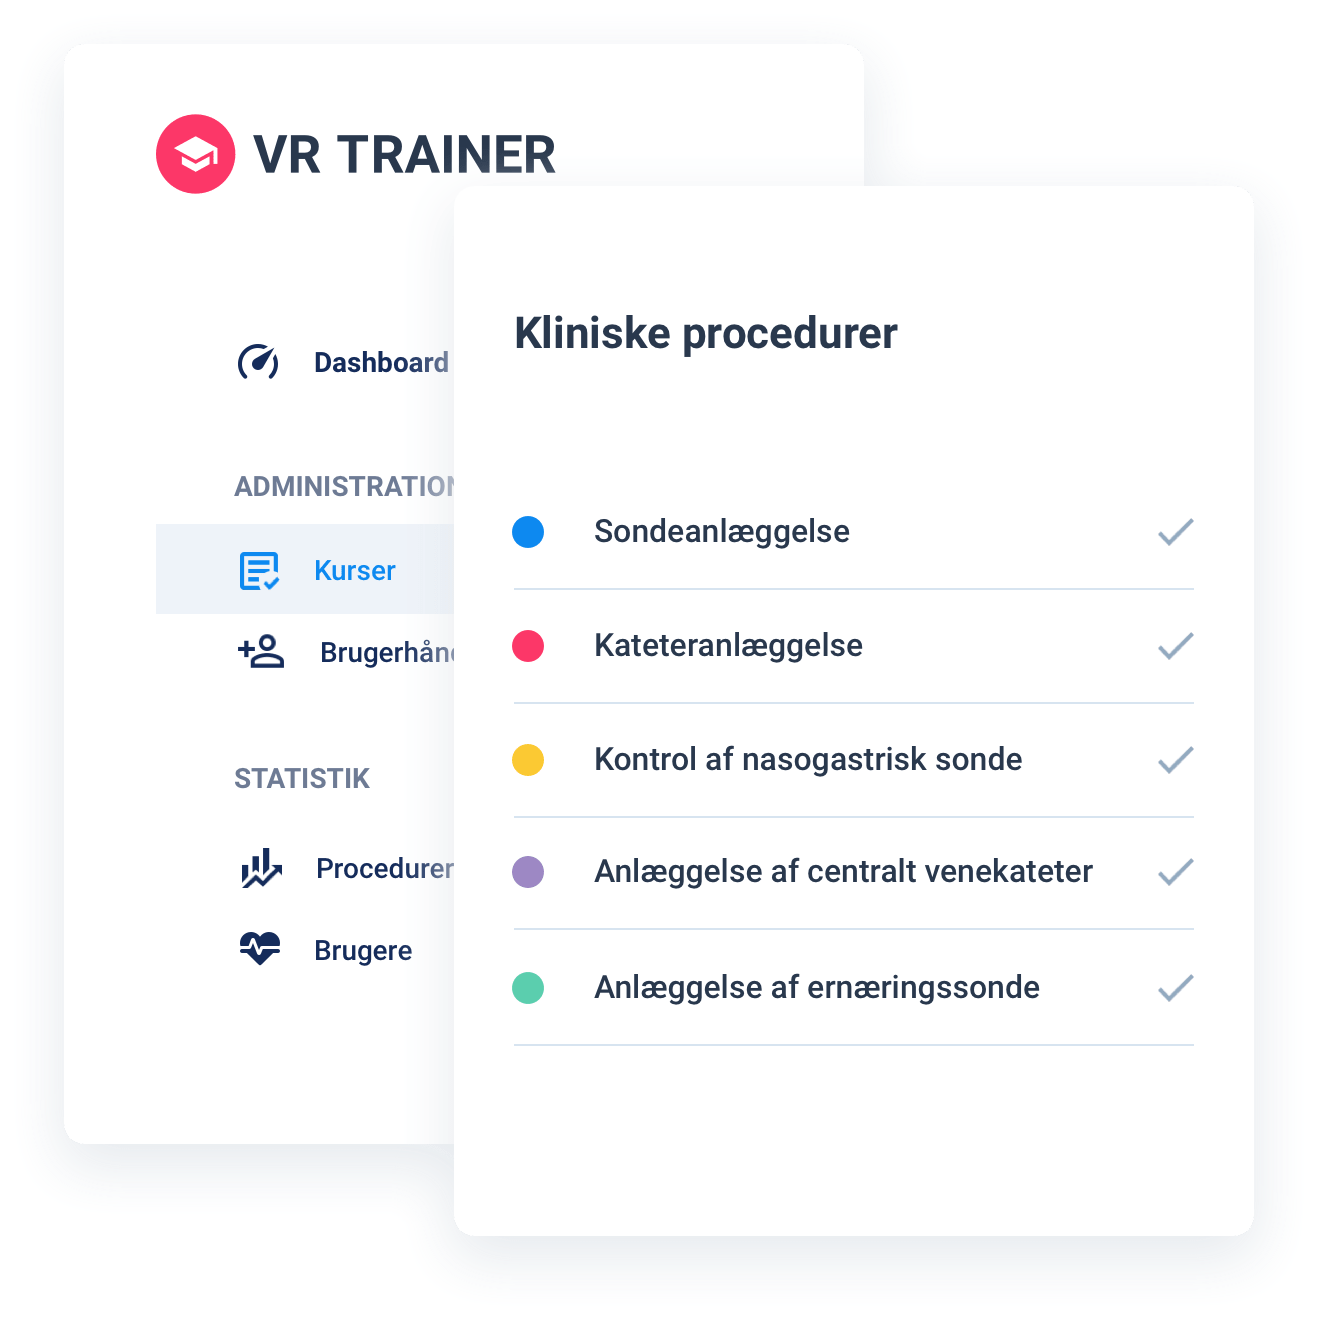 Kliniske procedurer - VR TRAINER